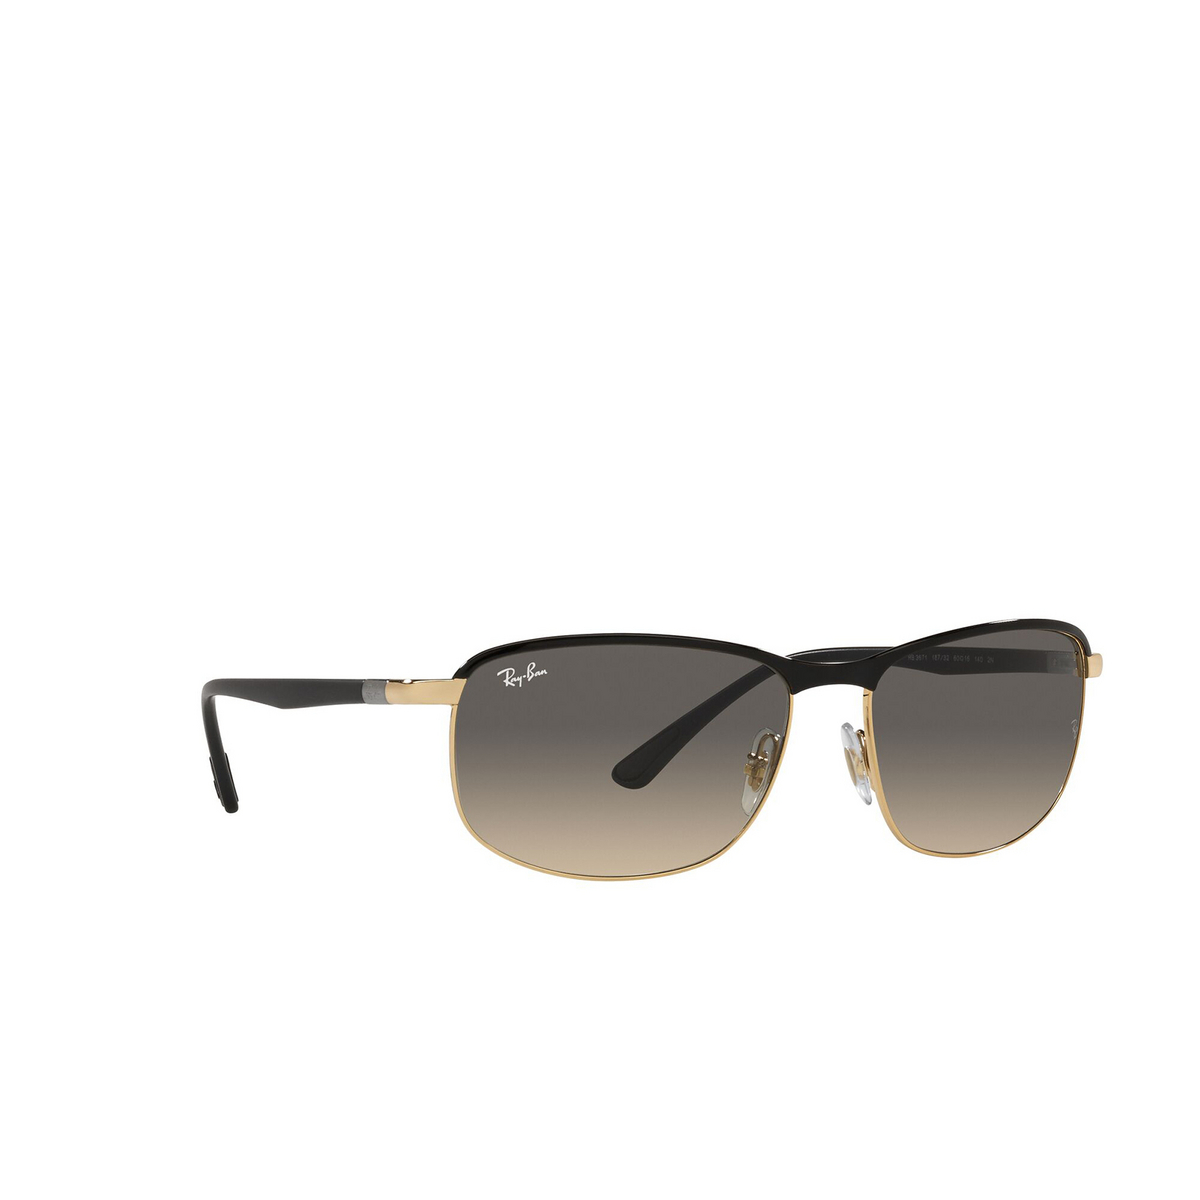 Ray-Ban® Square Sunglasses: RB3671 color Black On Arista 187/32 - three-quarters view.